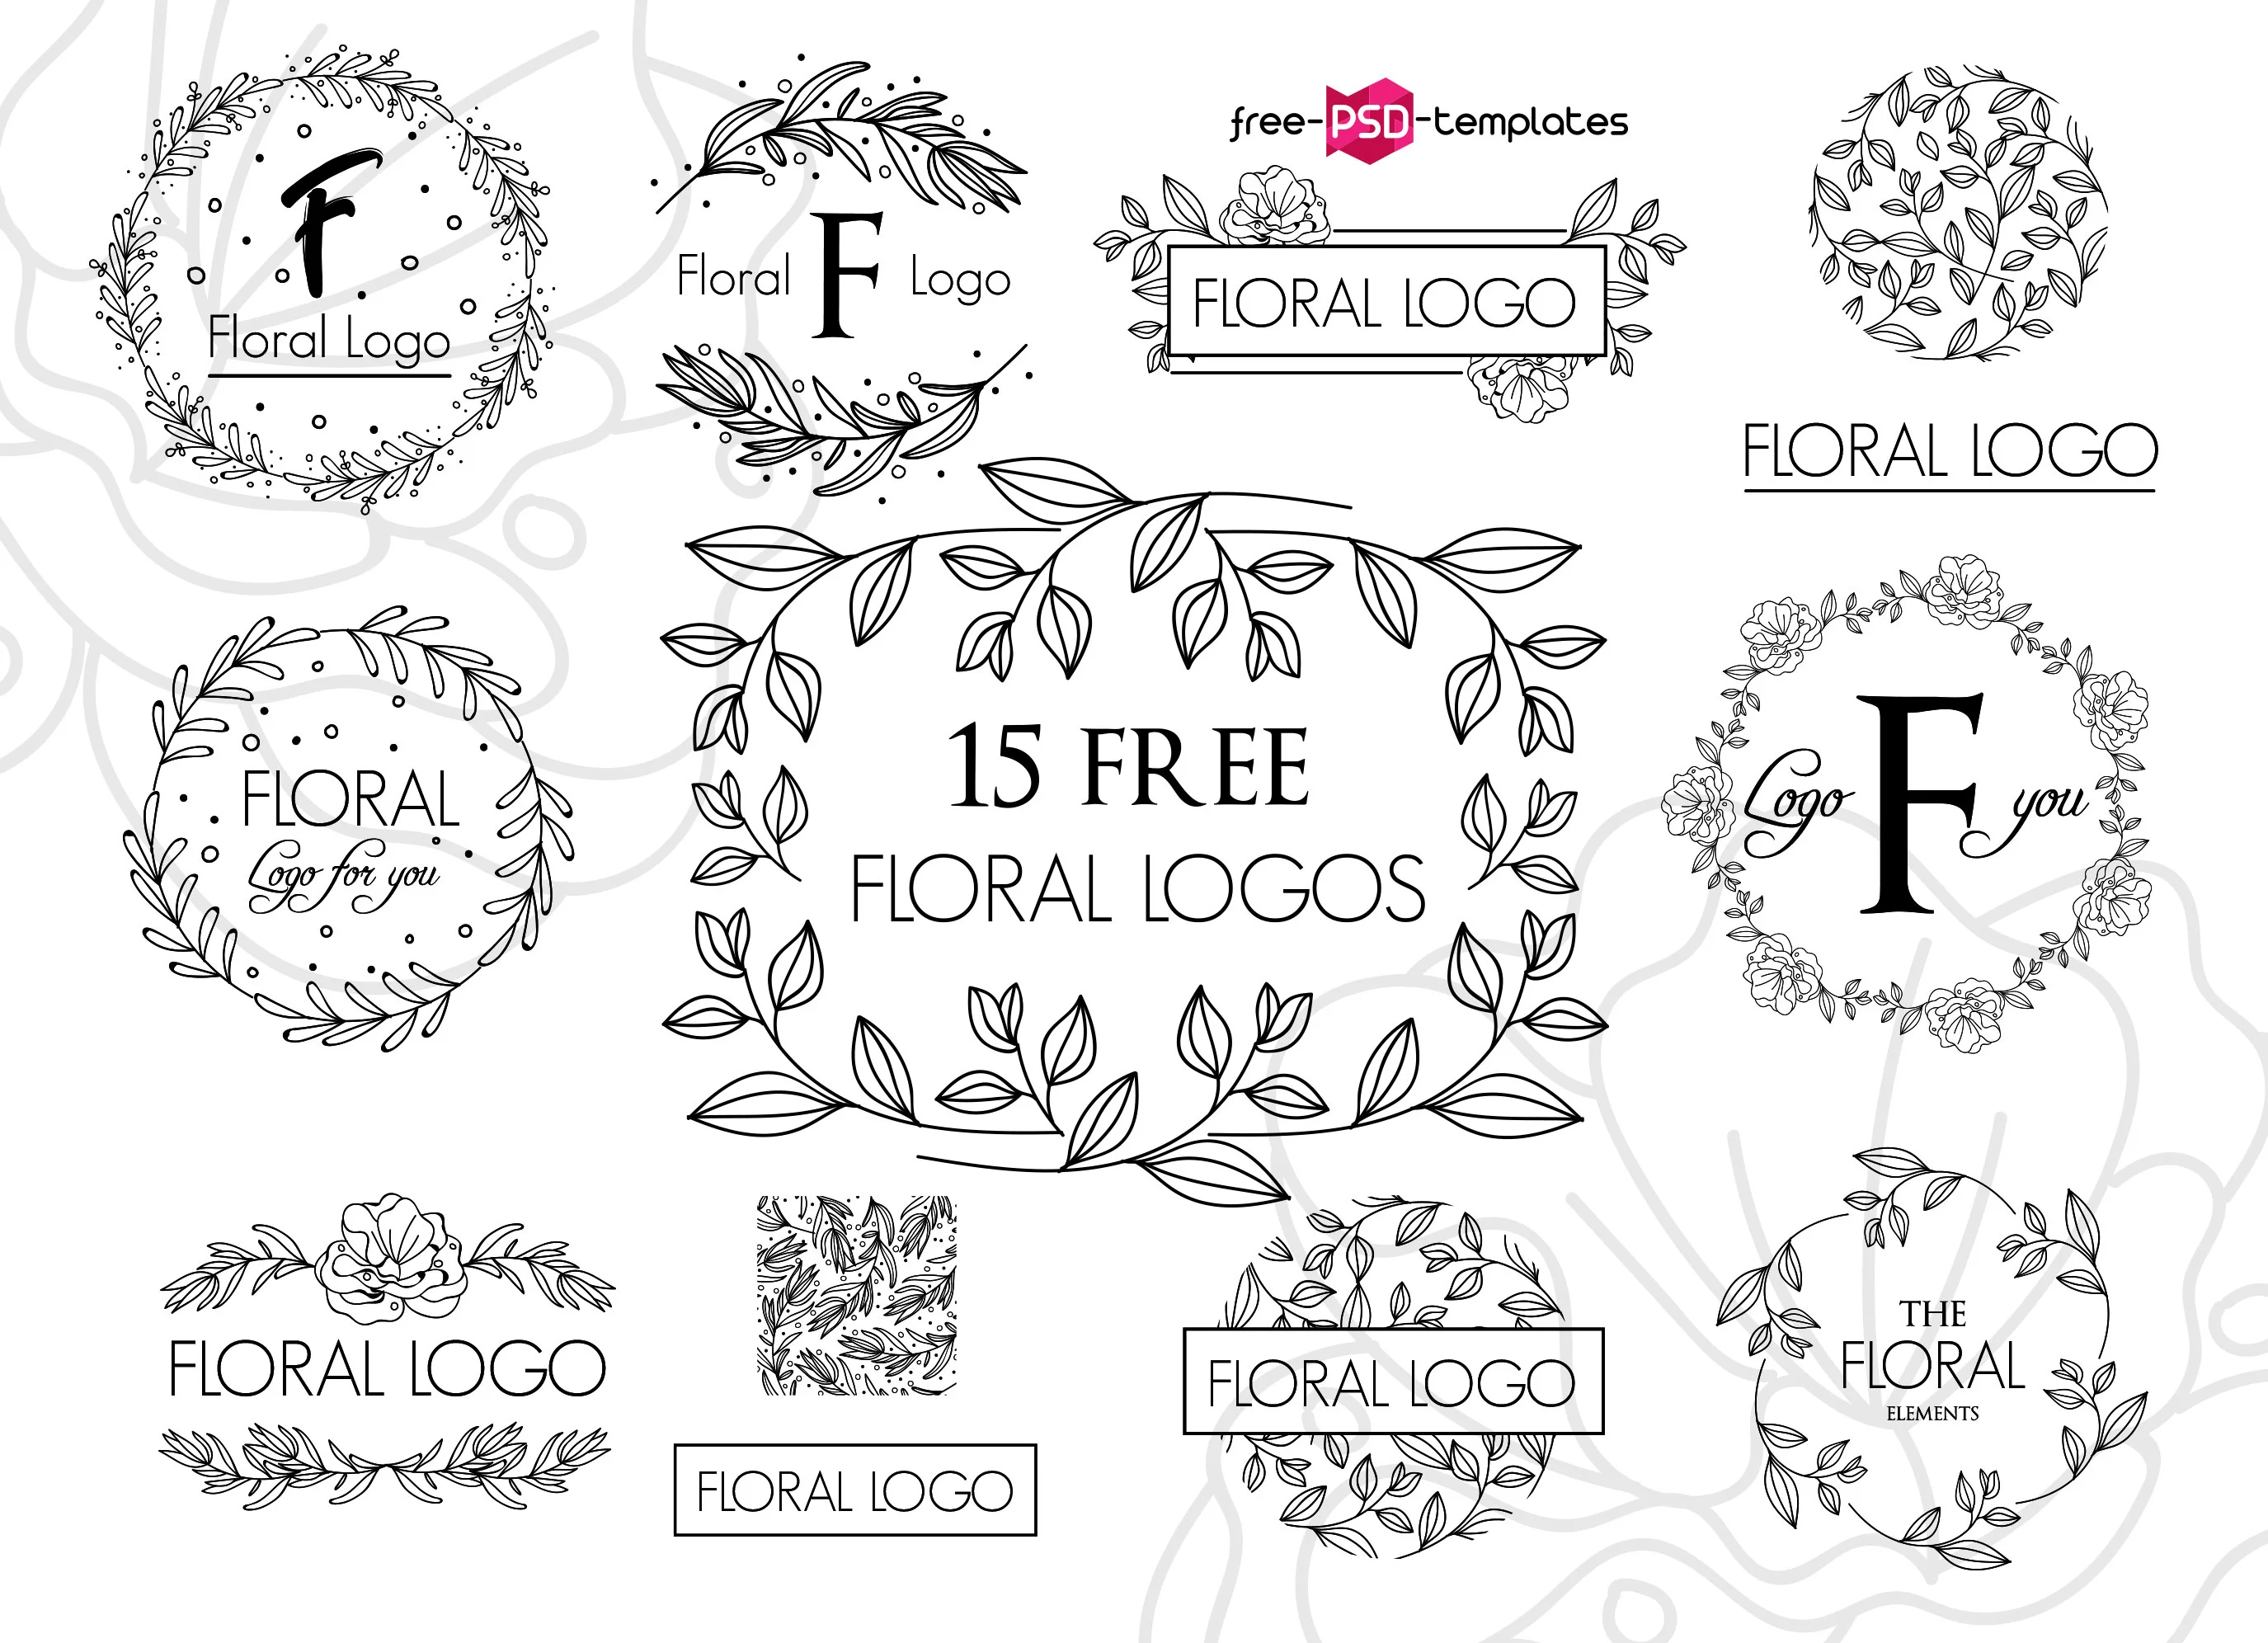 15 Free Vector Floral Logos